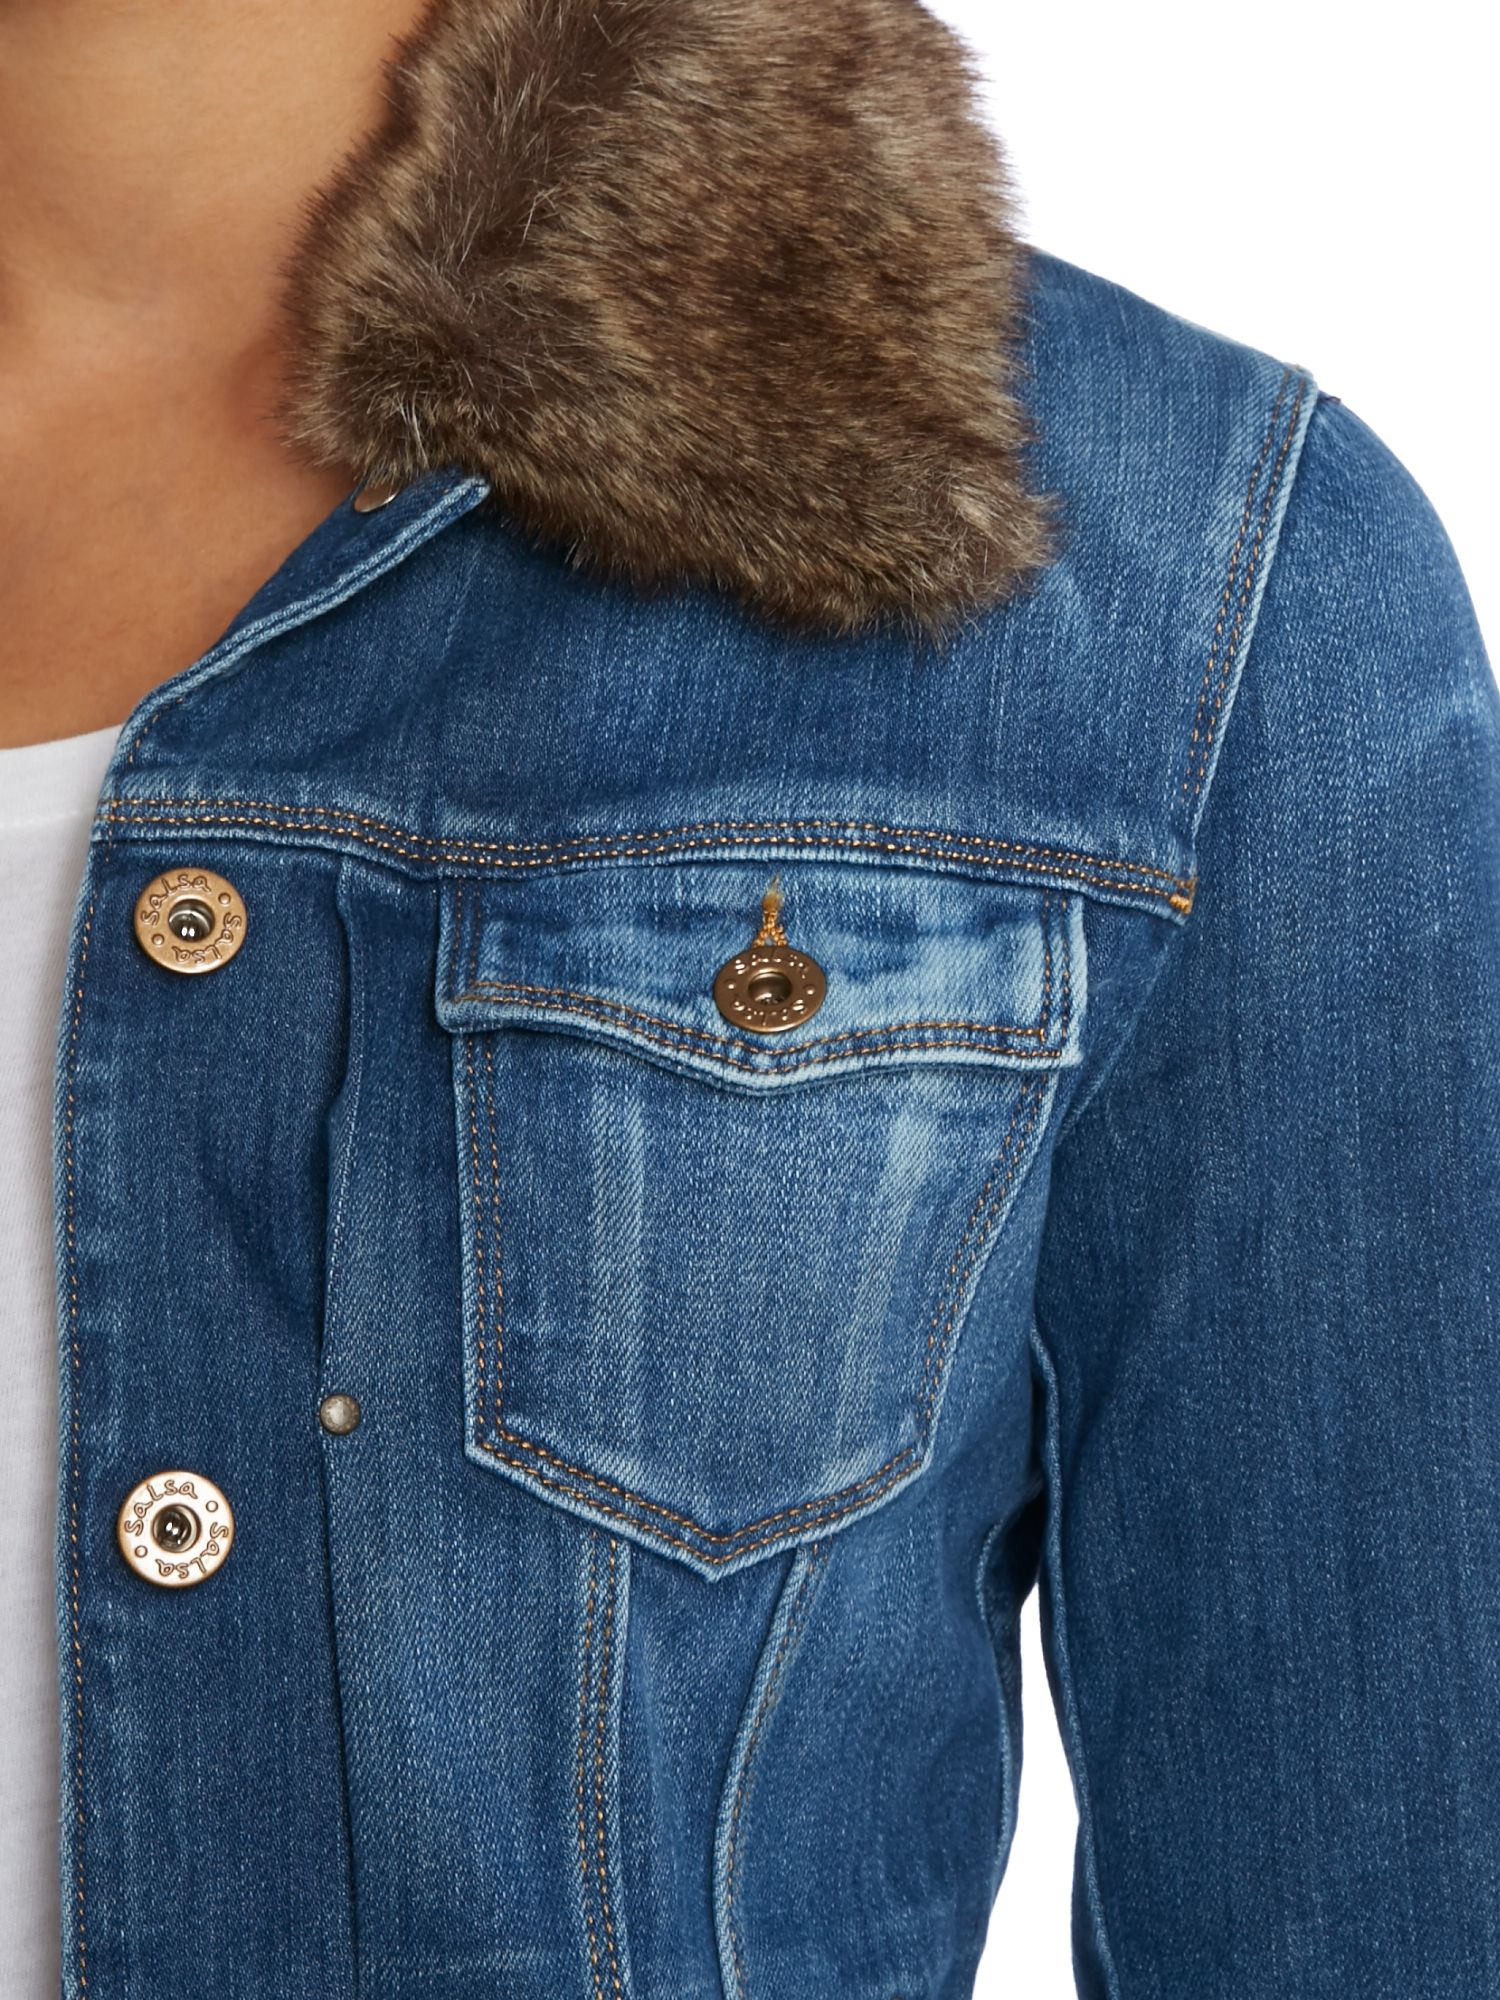 Jean Jacket Coat With Fur - jacketl